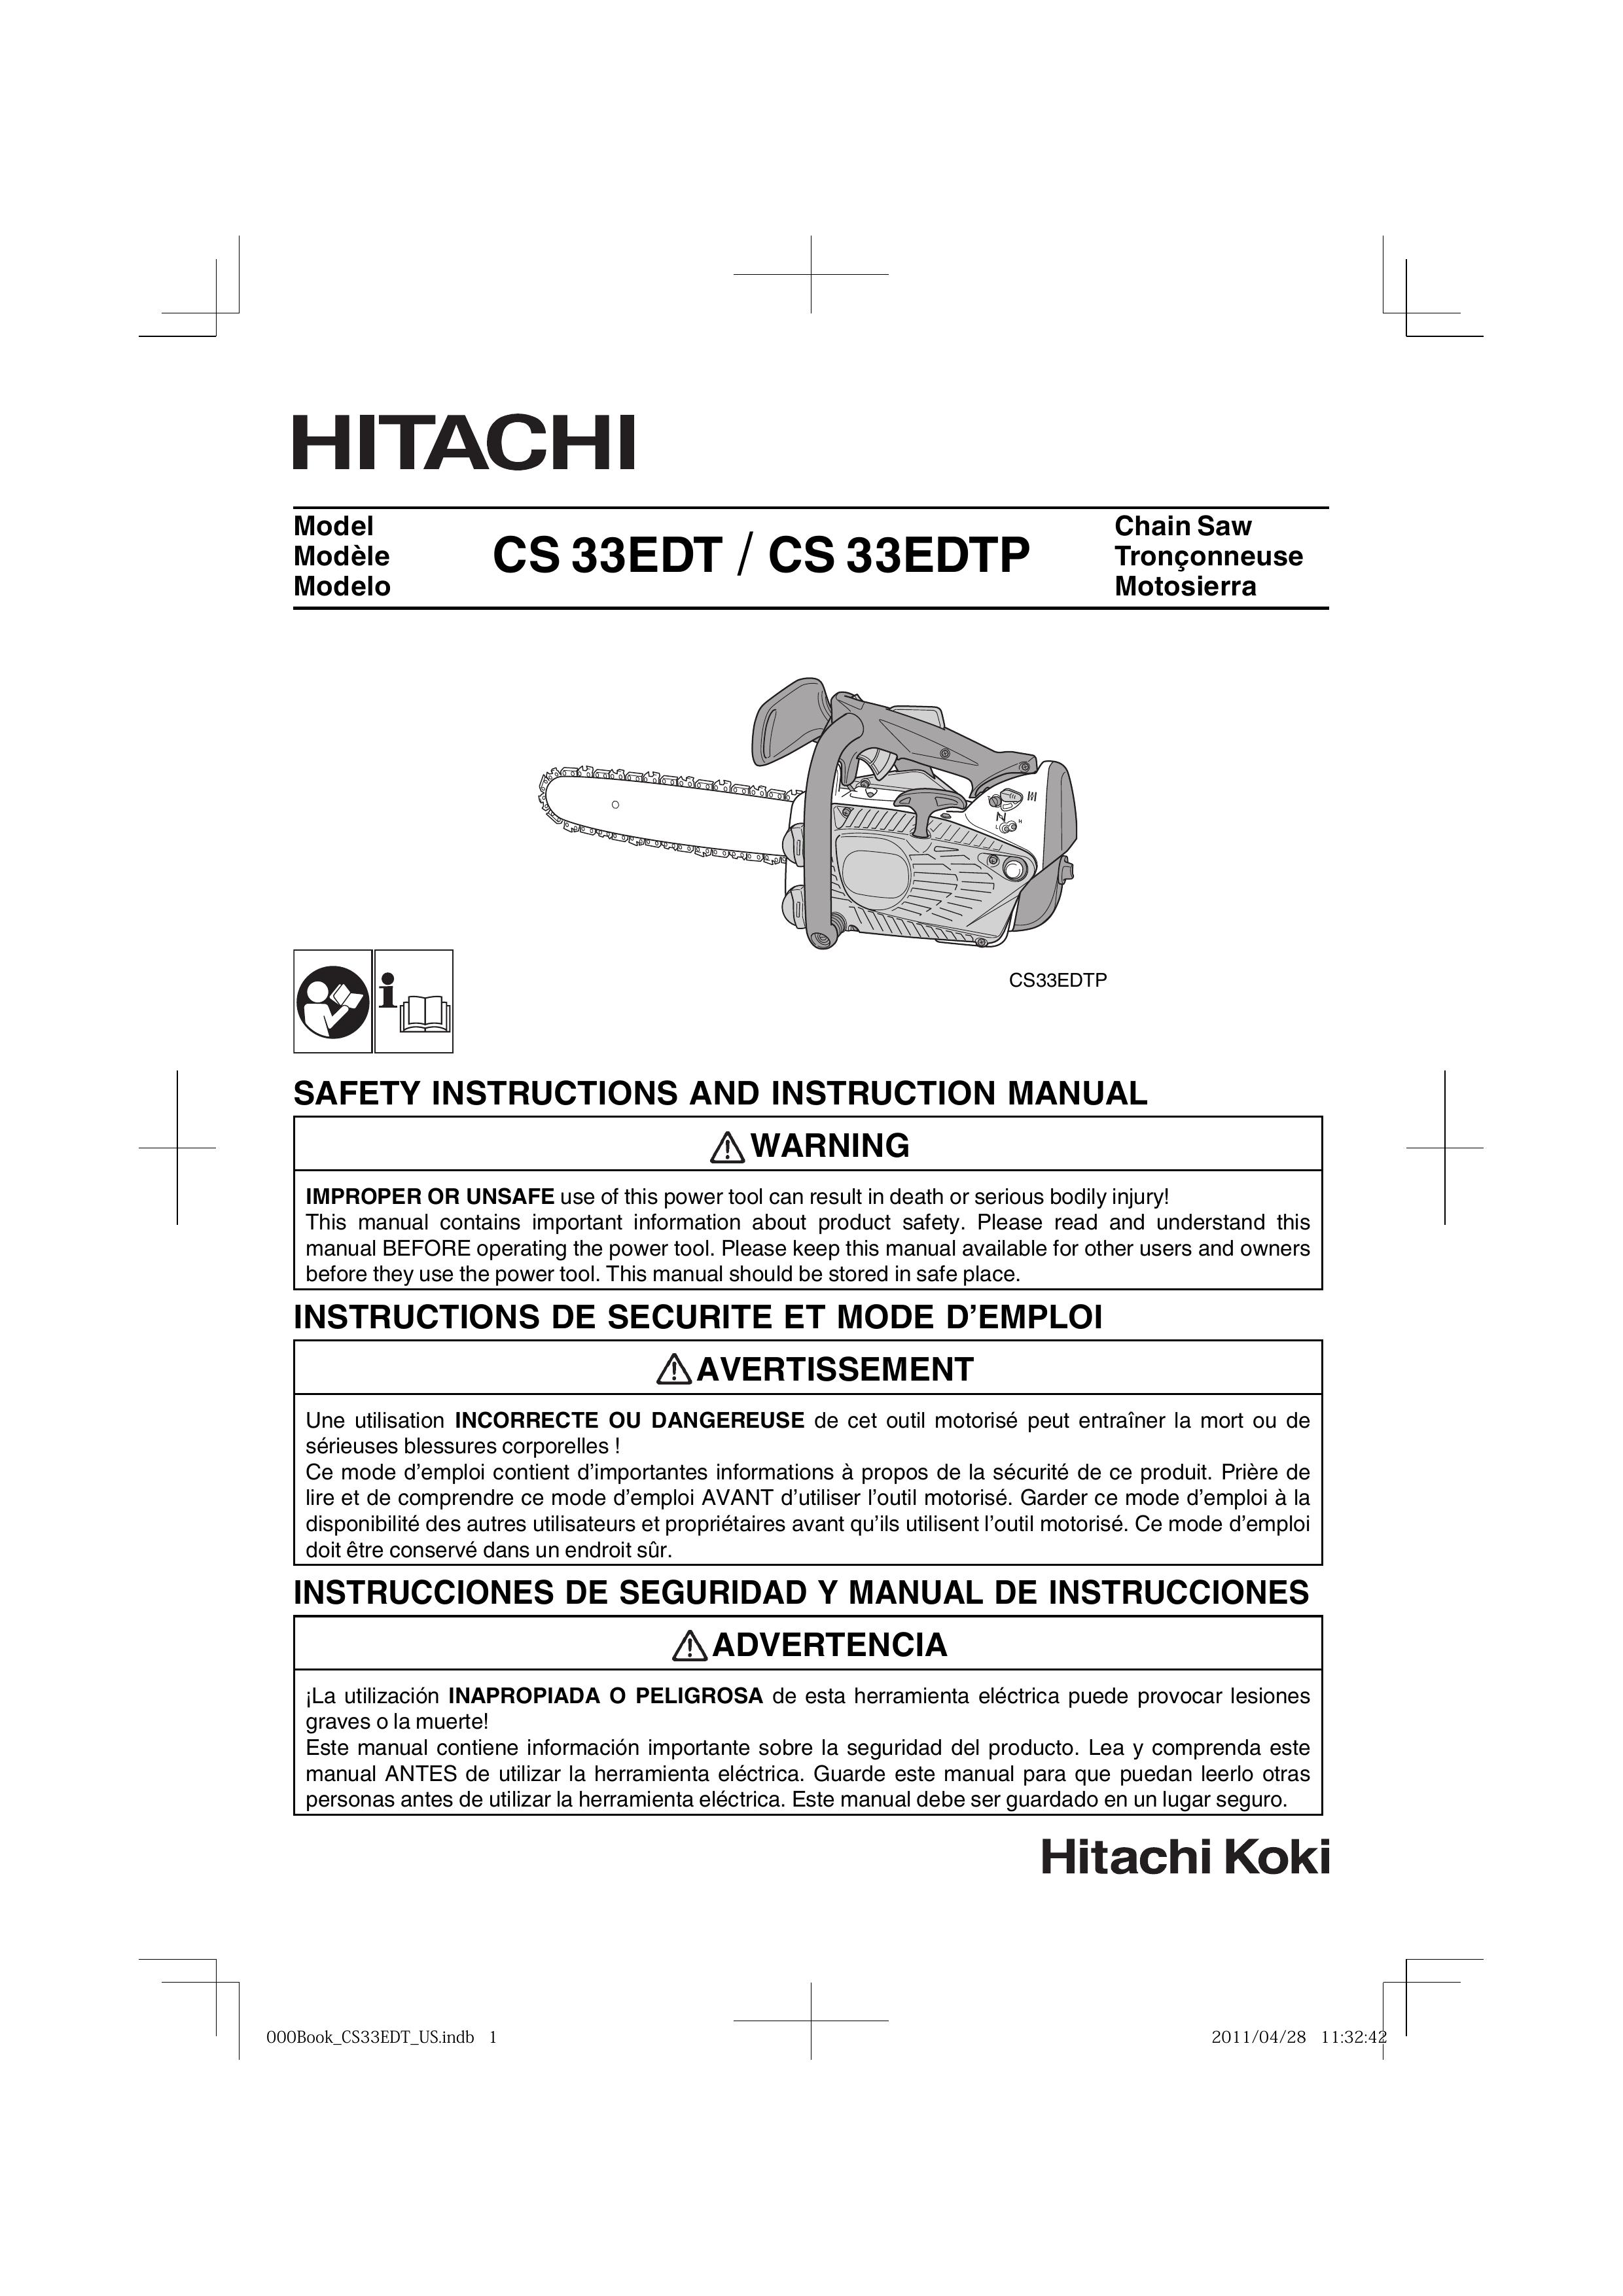 Hitachi Koki USA CS 33EDT Chainsaw User Manual